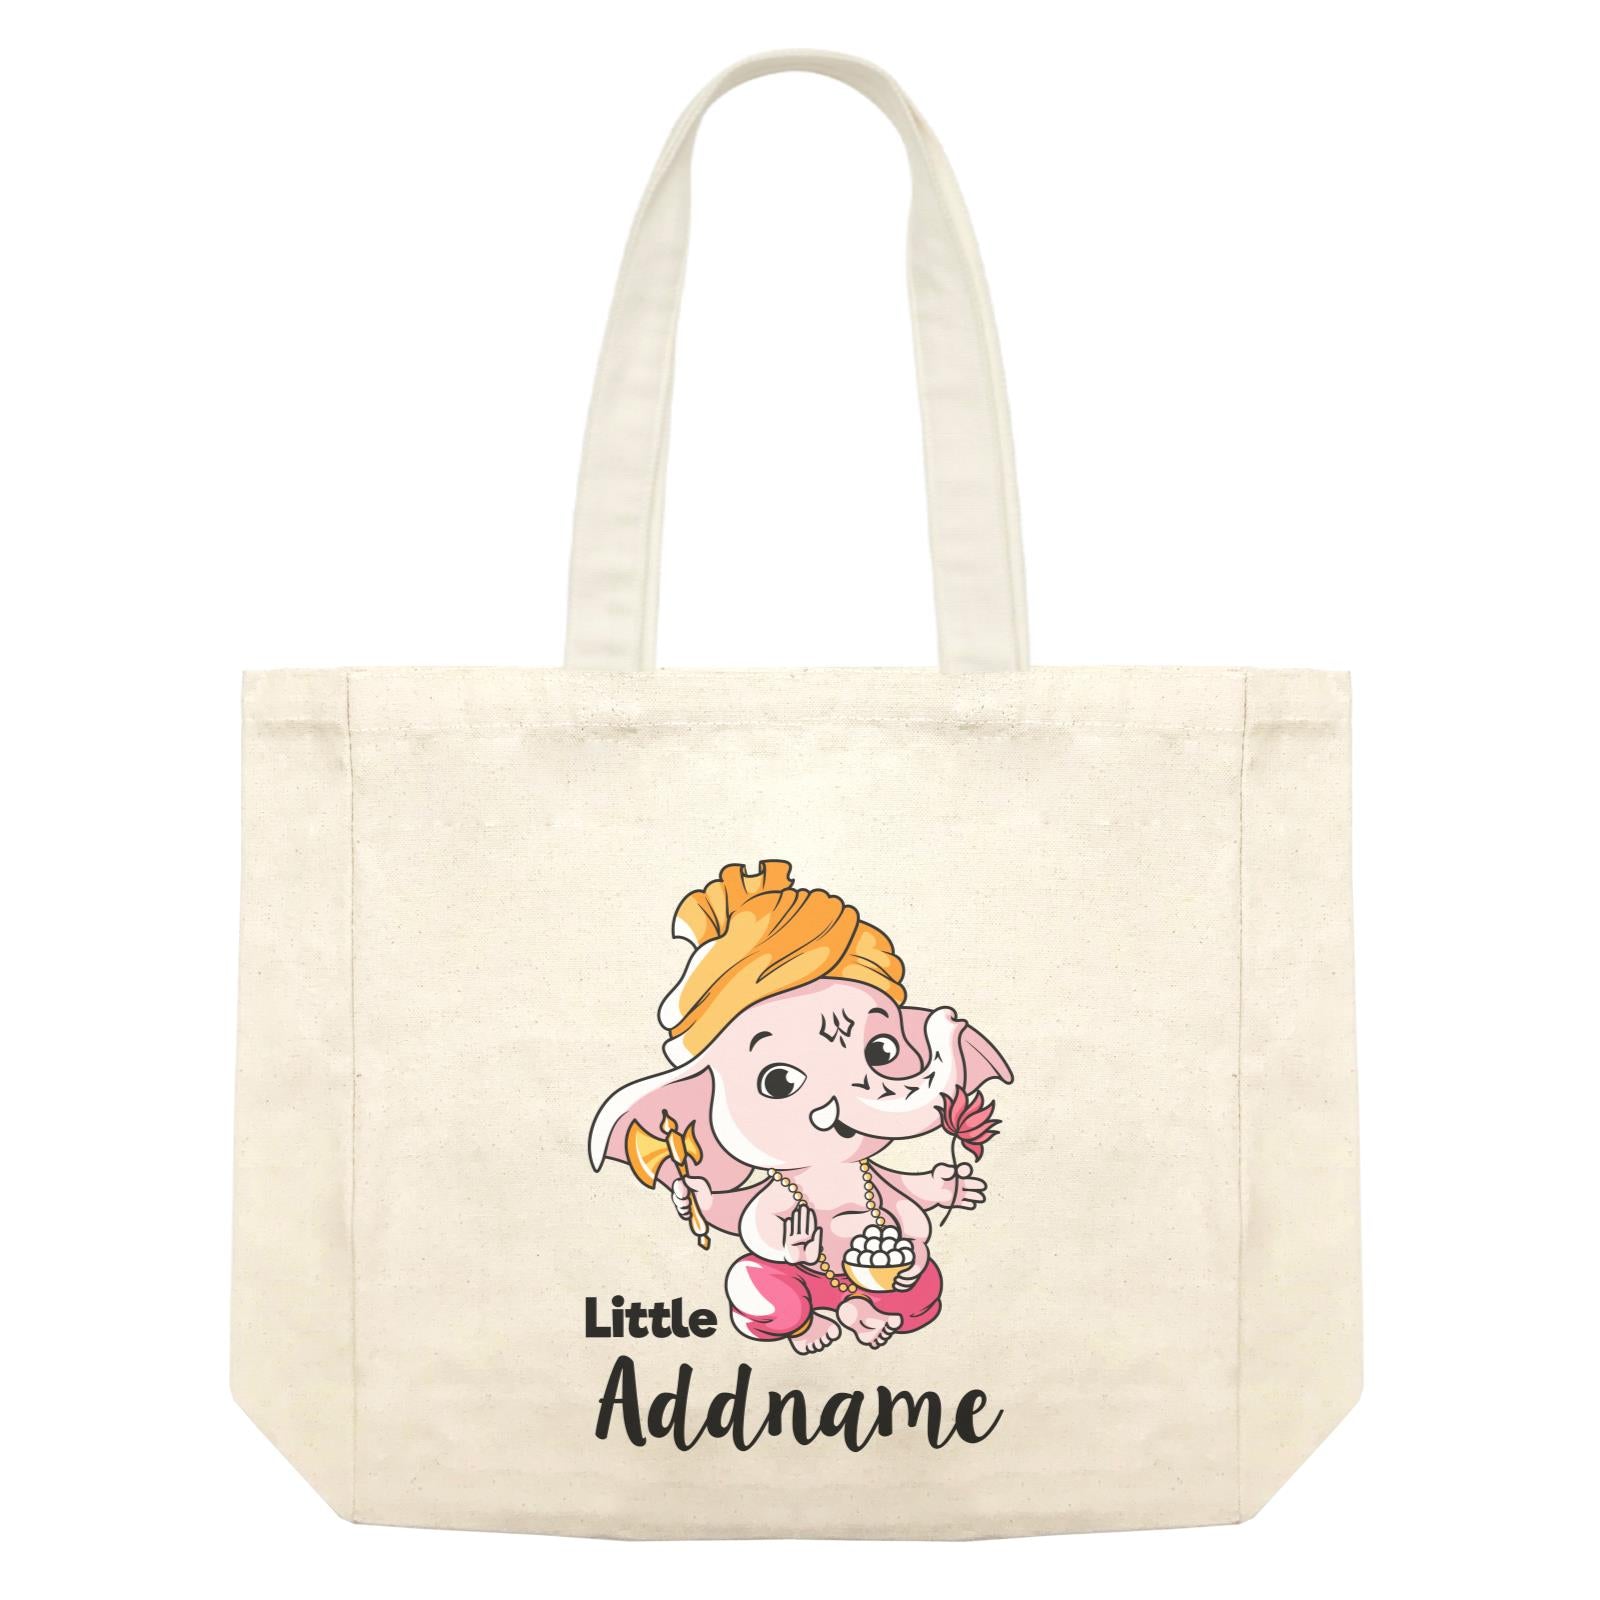 Cute Ganesha Little Addname Shopping Bag